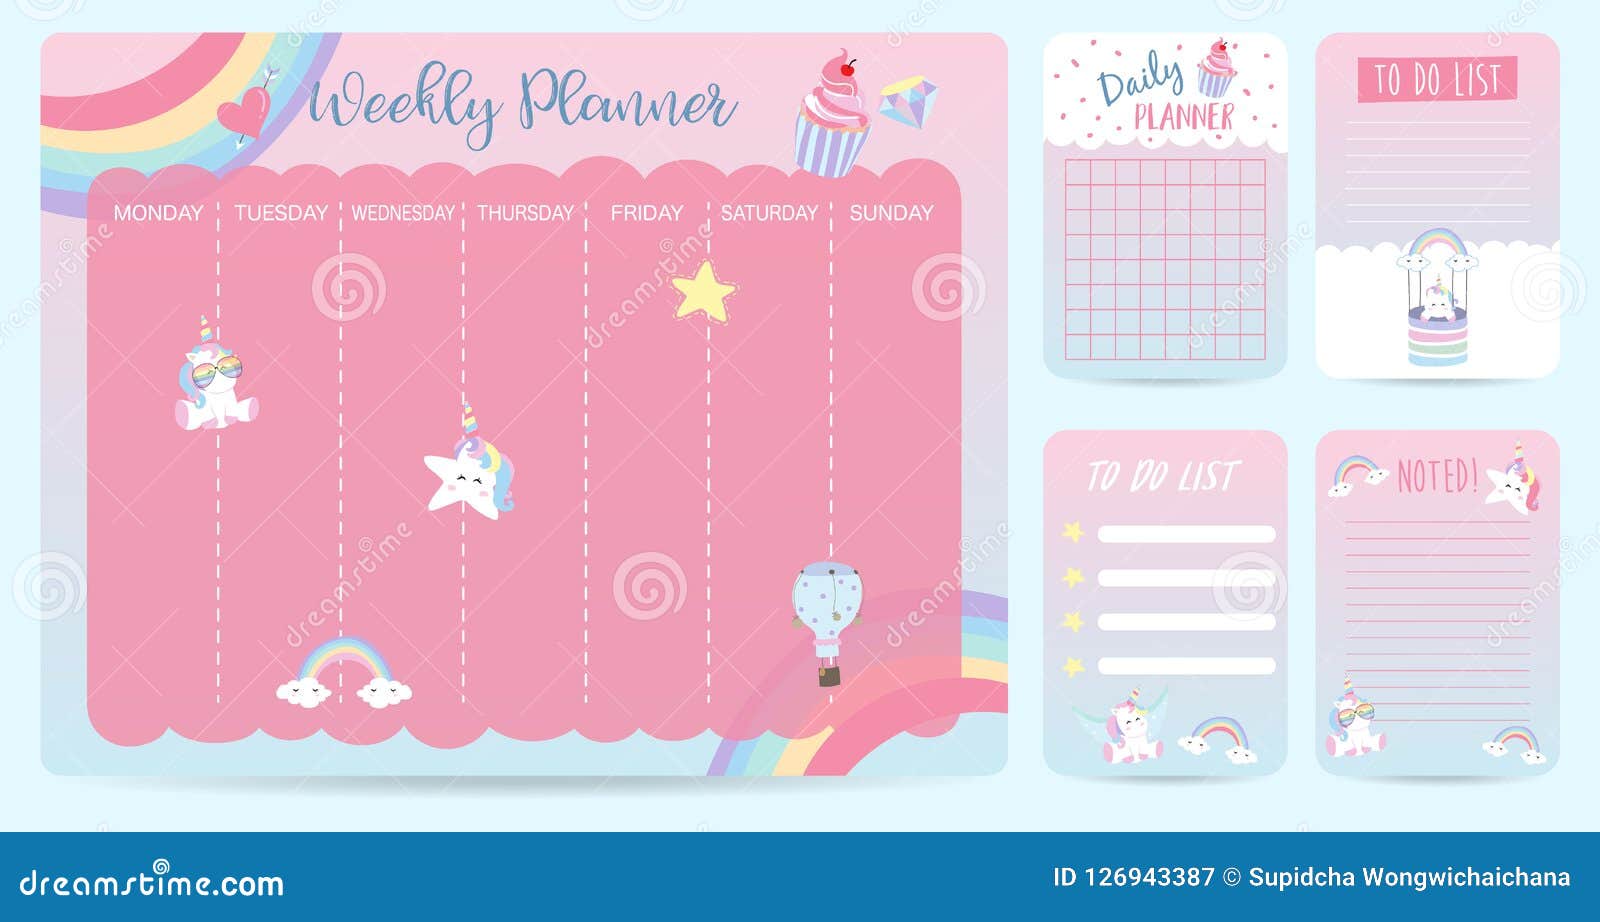 pastel weekly calendar planner with llama,alpaca,cactus,glasses